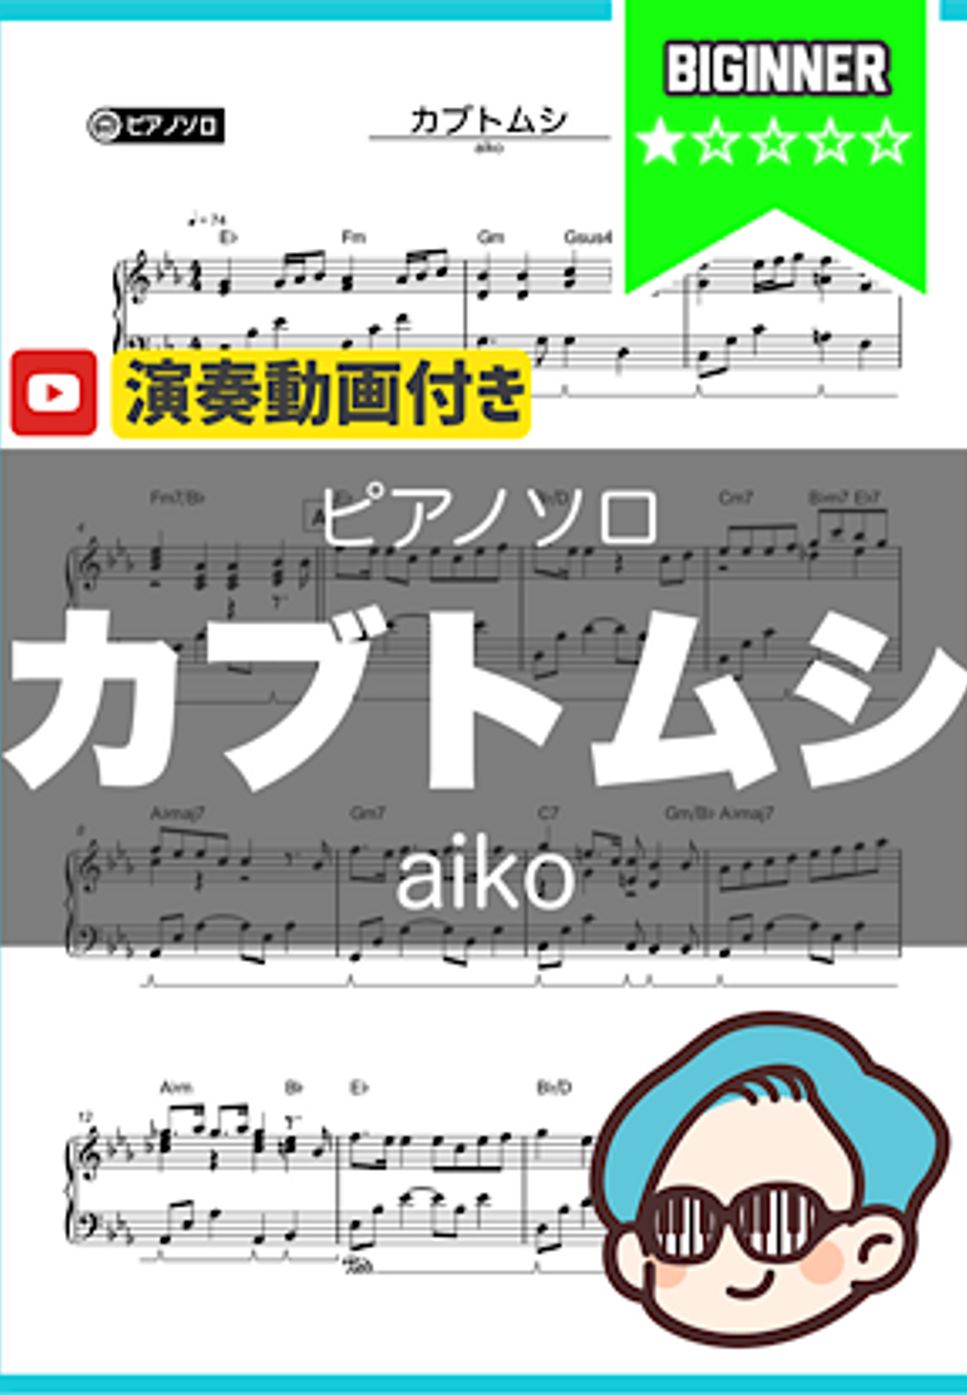 aiko - カブトムシ by シータピアノ